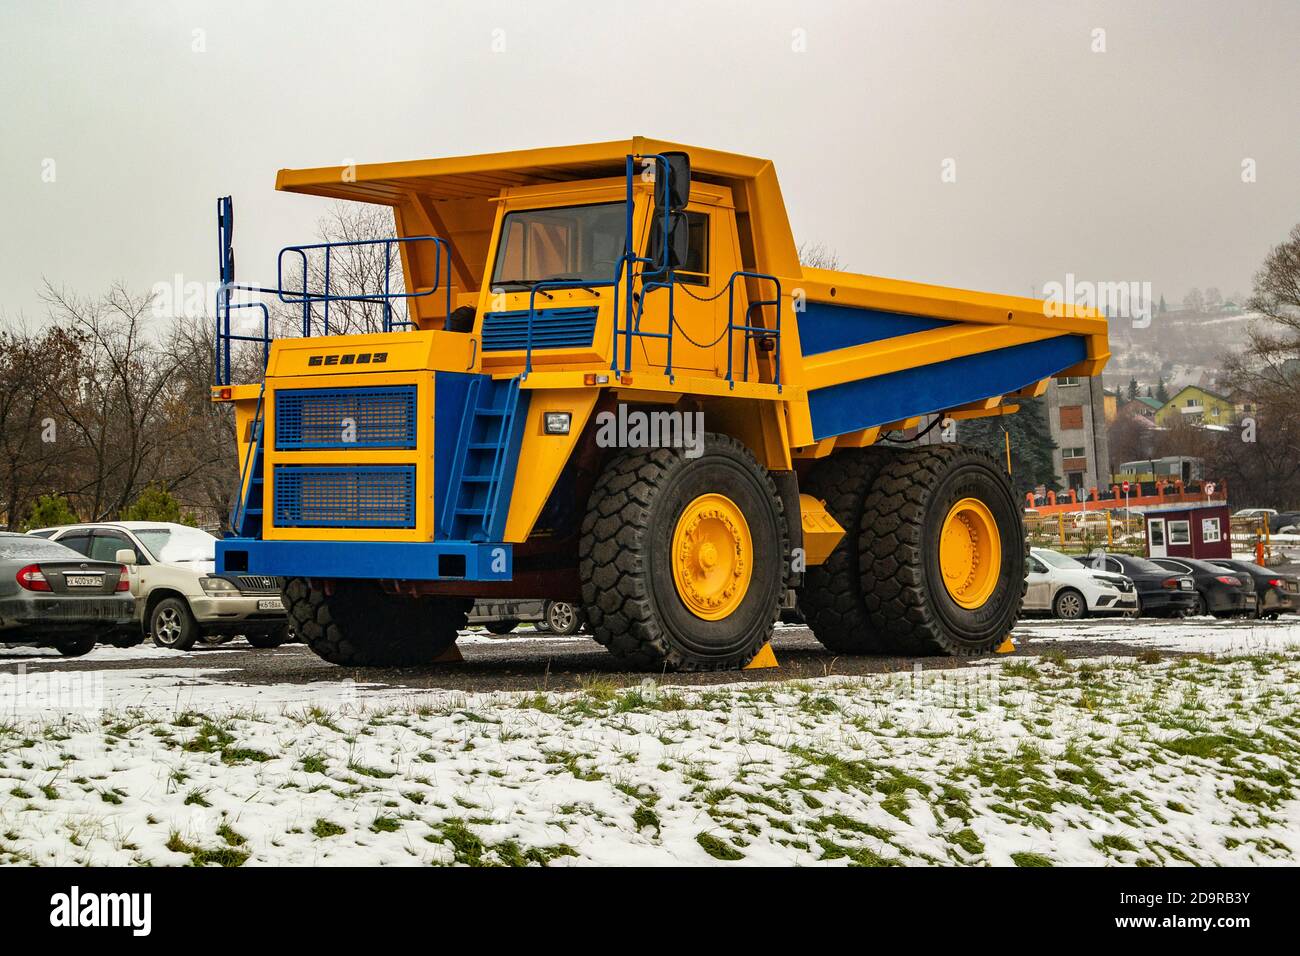 Novokuznetsk, Russia, 03.11.2020. The new BelAZ 7555 Mining dump truck is parked along with passenger cars Stock Photo